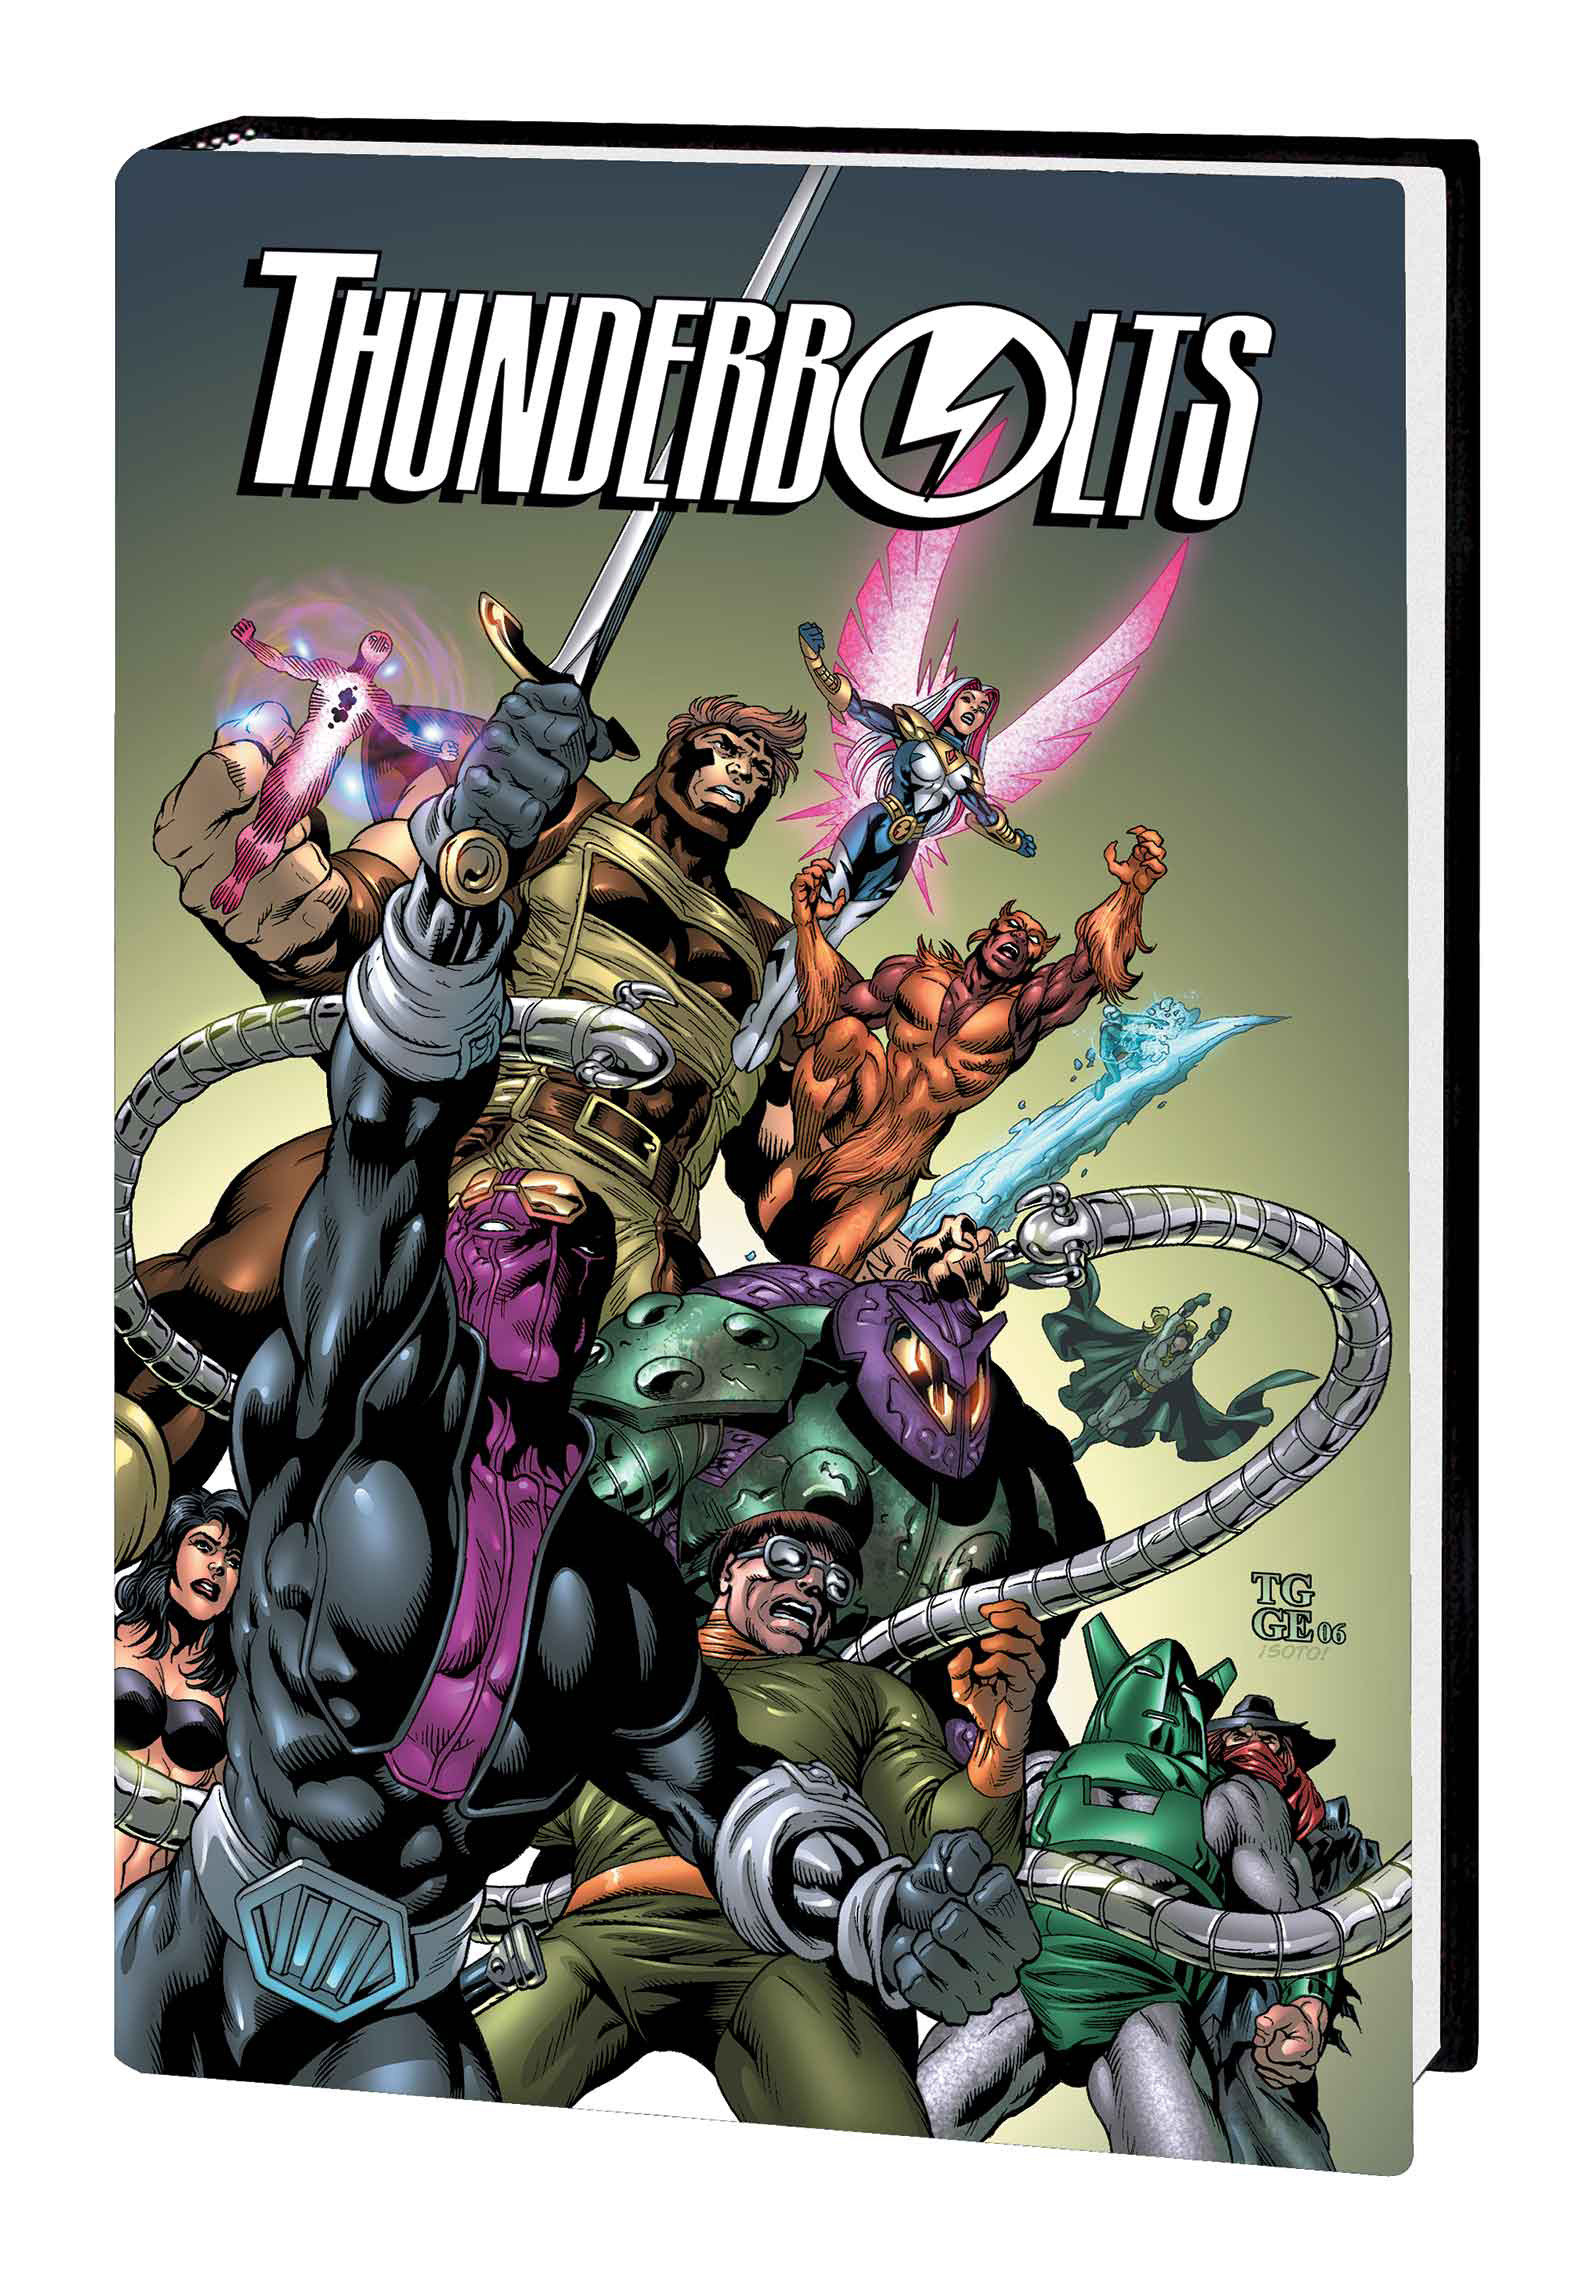 Thunderbolts Omnibus Hardcover Volume 3 Grummet Civil War Direct Market Variant